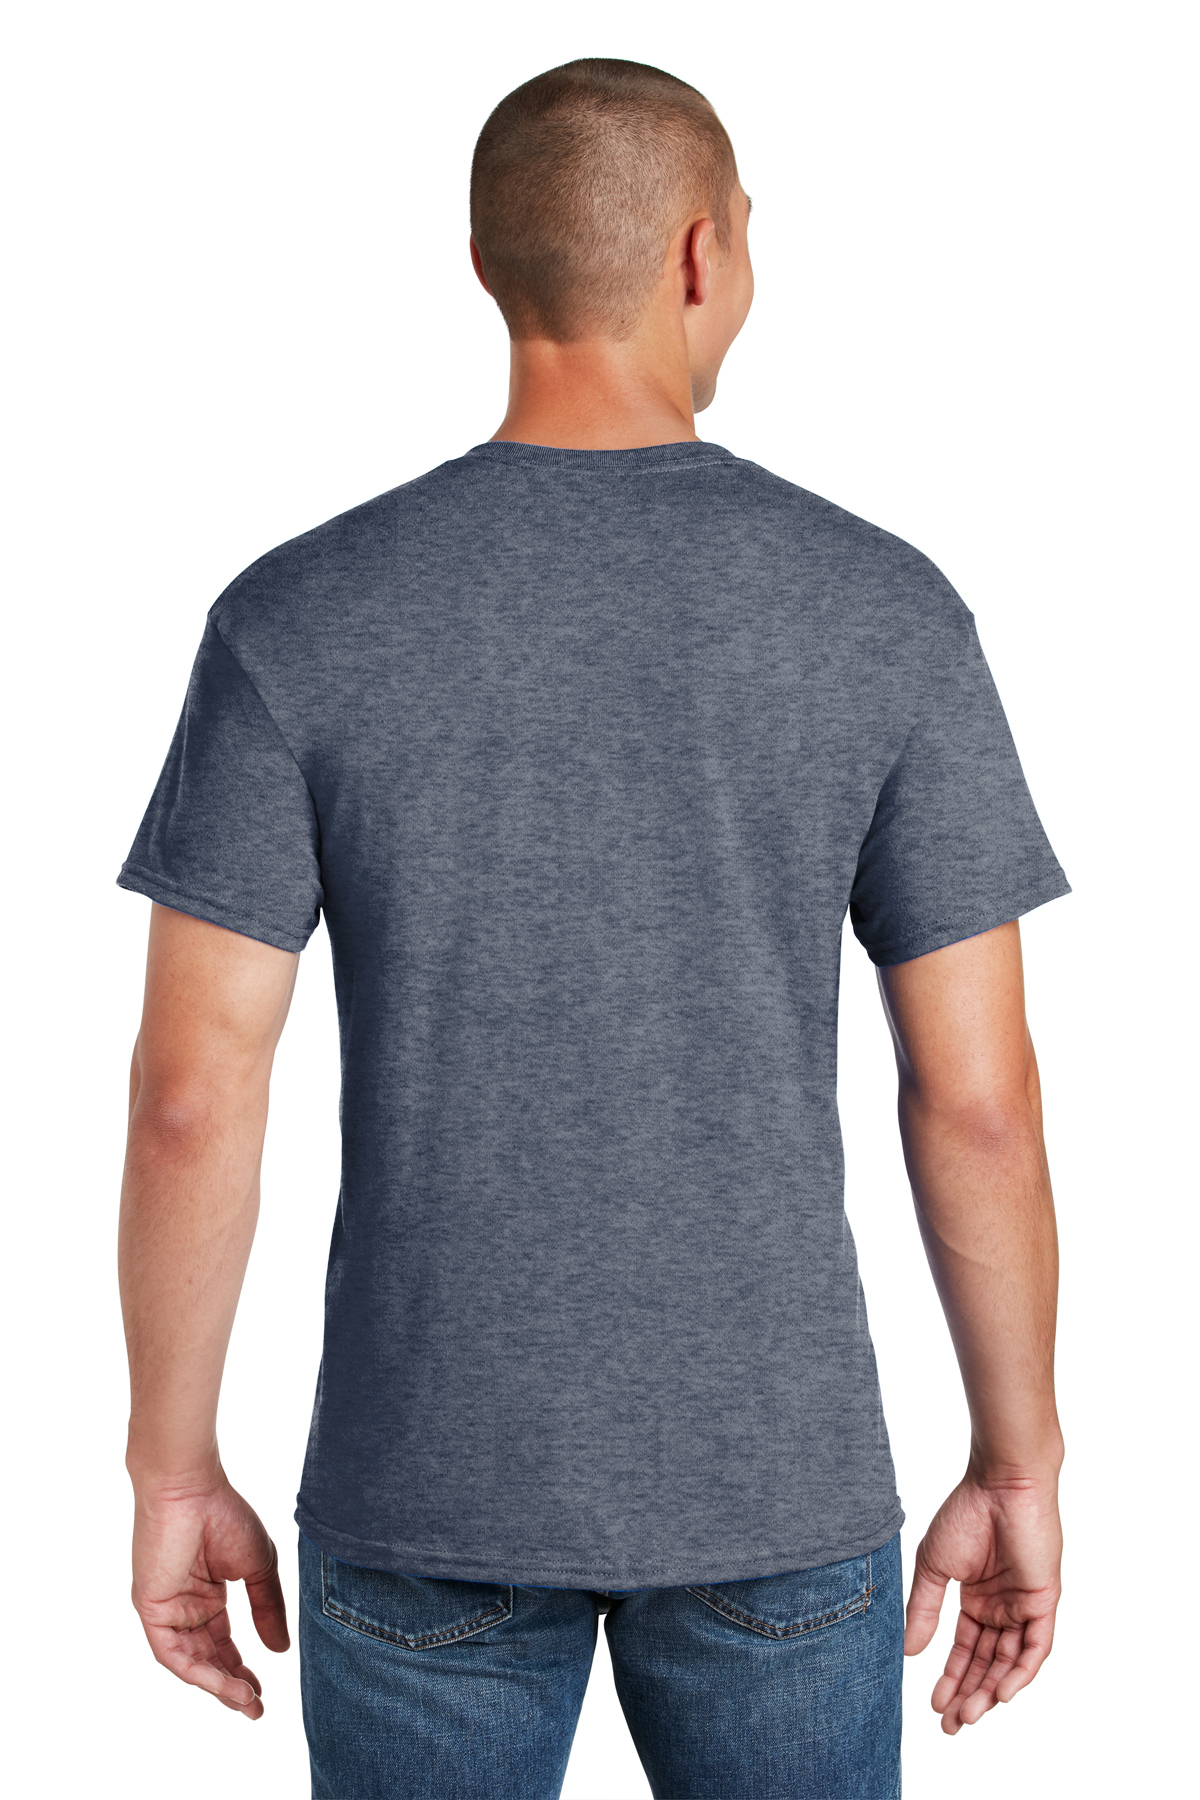 Gildan - DryBlend 50 Cotton/50 Poly T-Shirt | Product | Online Apparel ...